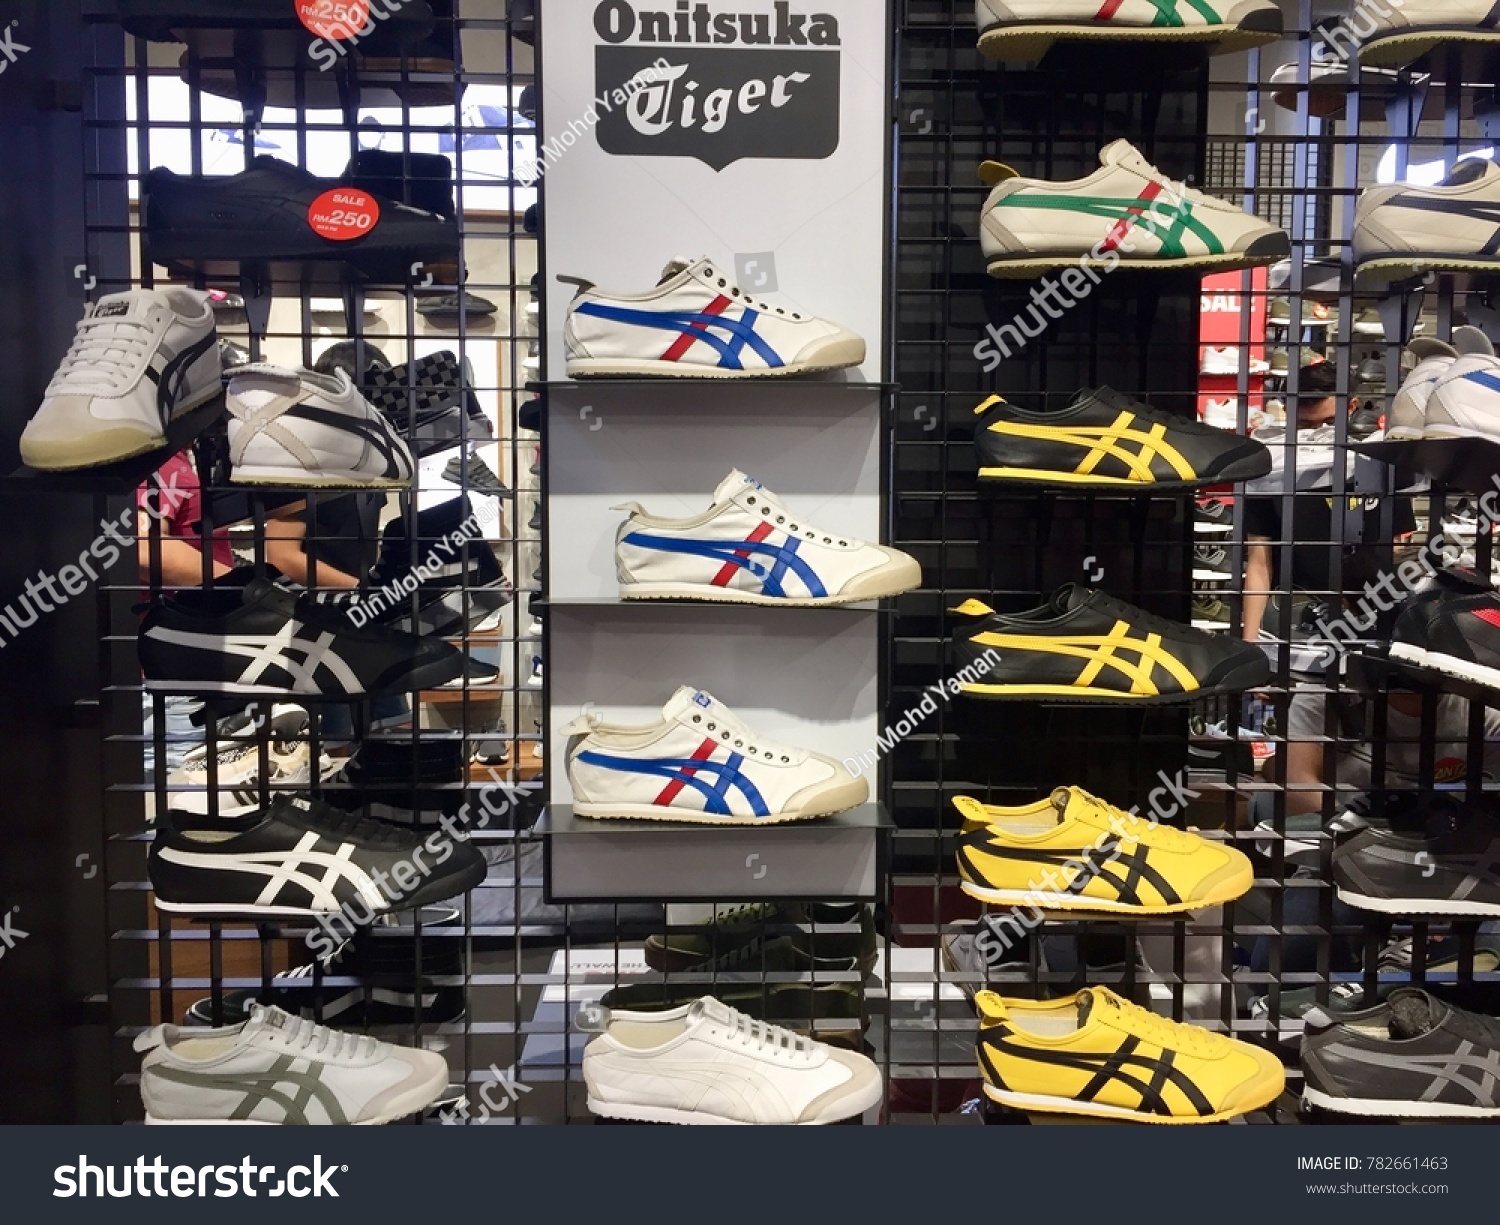 onitsuka tiger shoes malaysia